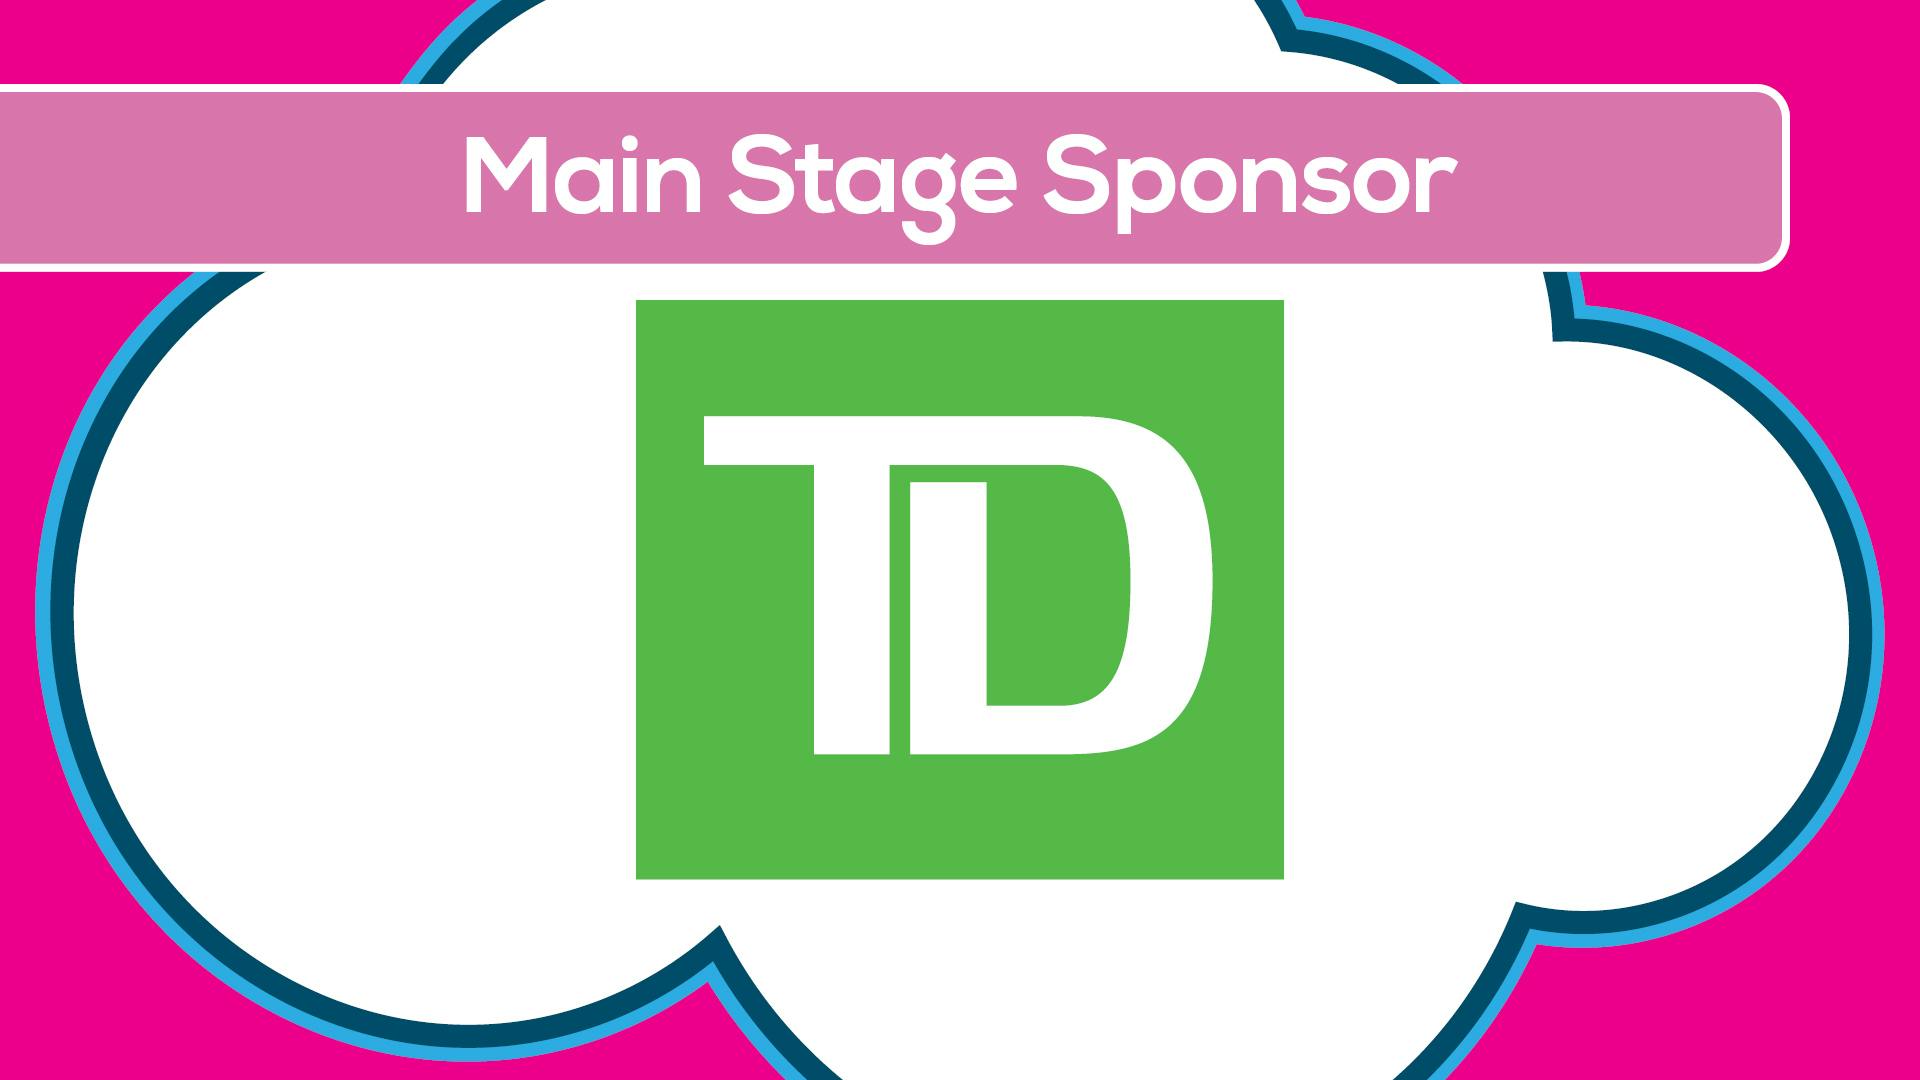 TD - Main Stage Sponsor 